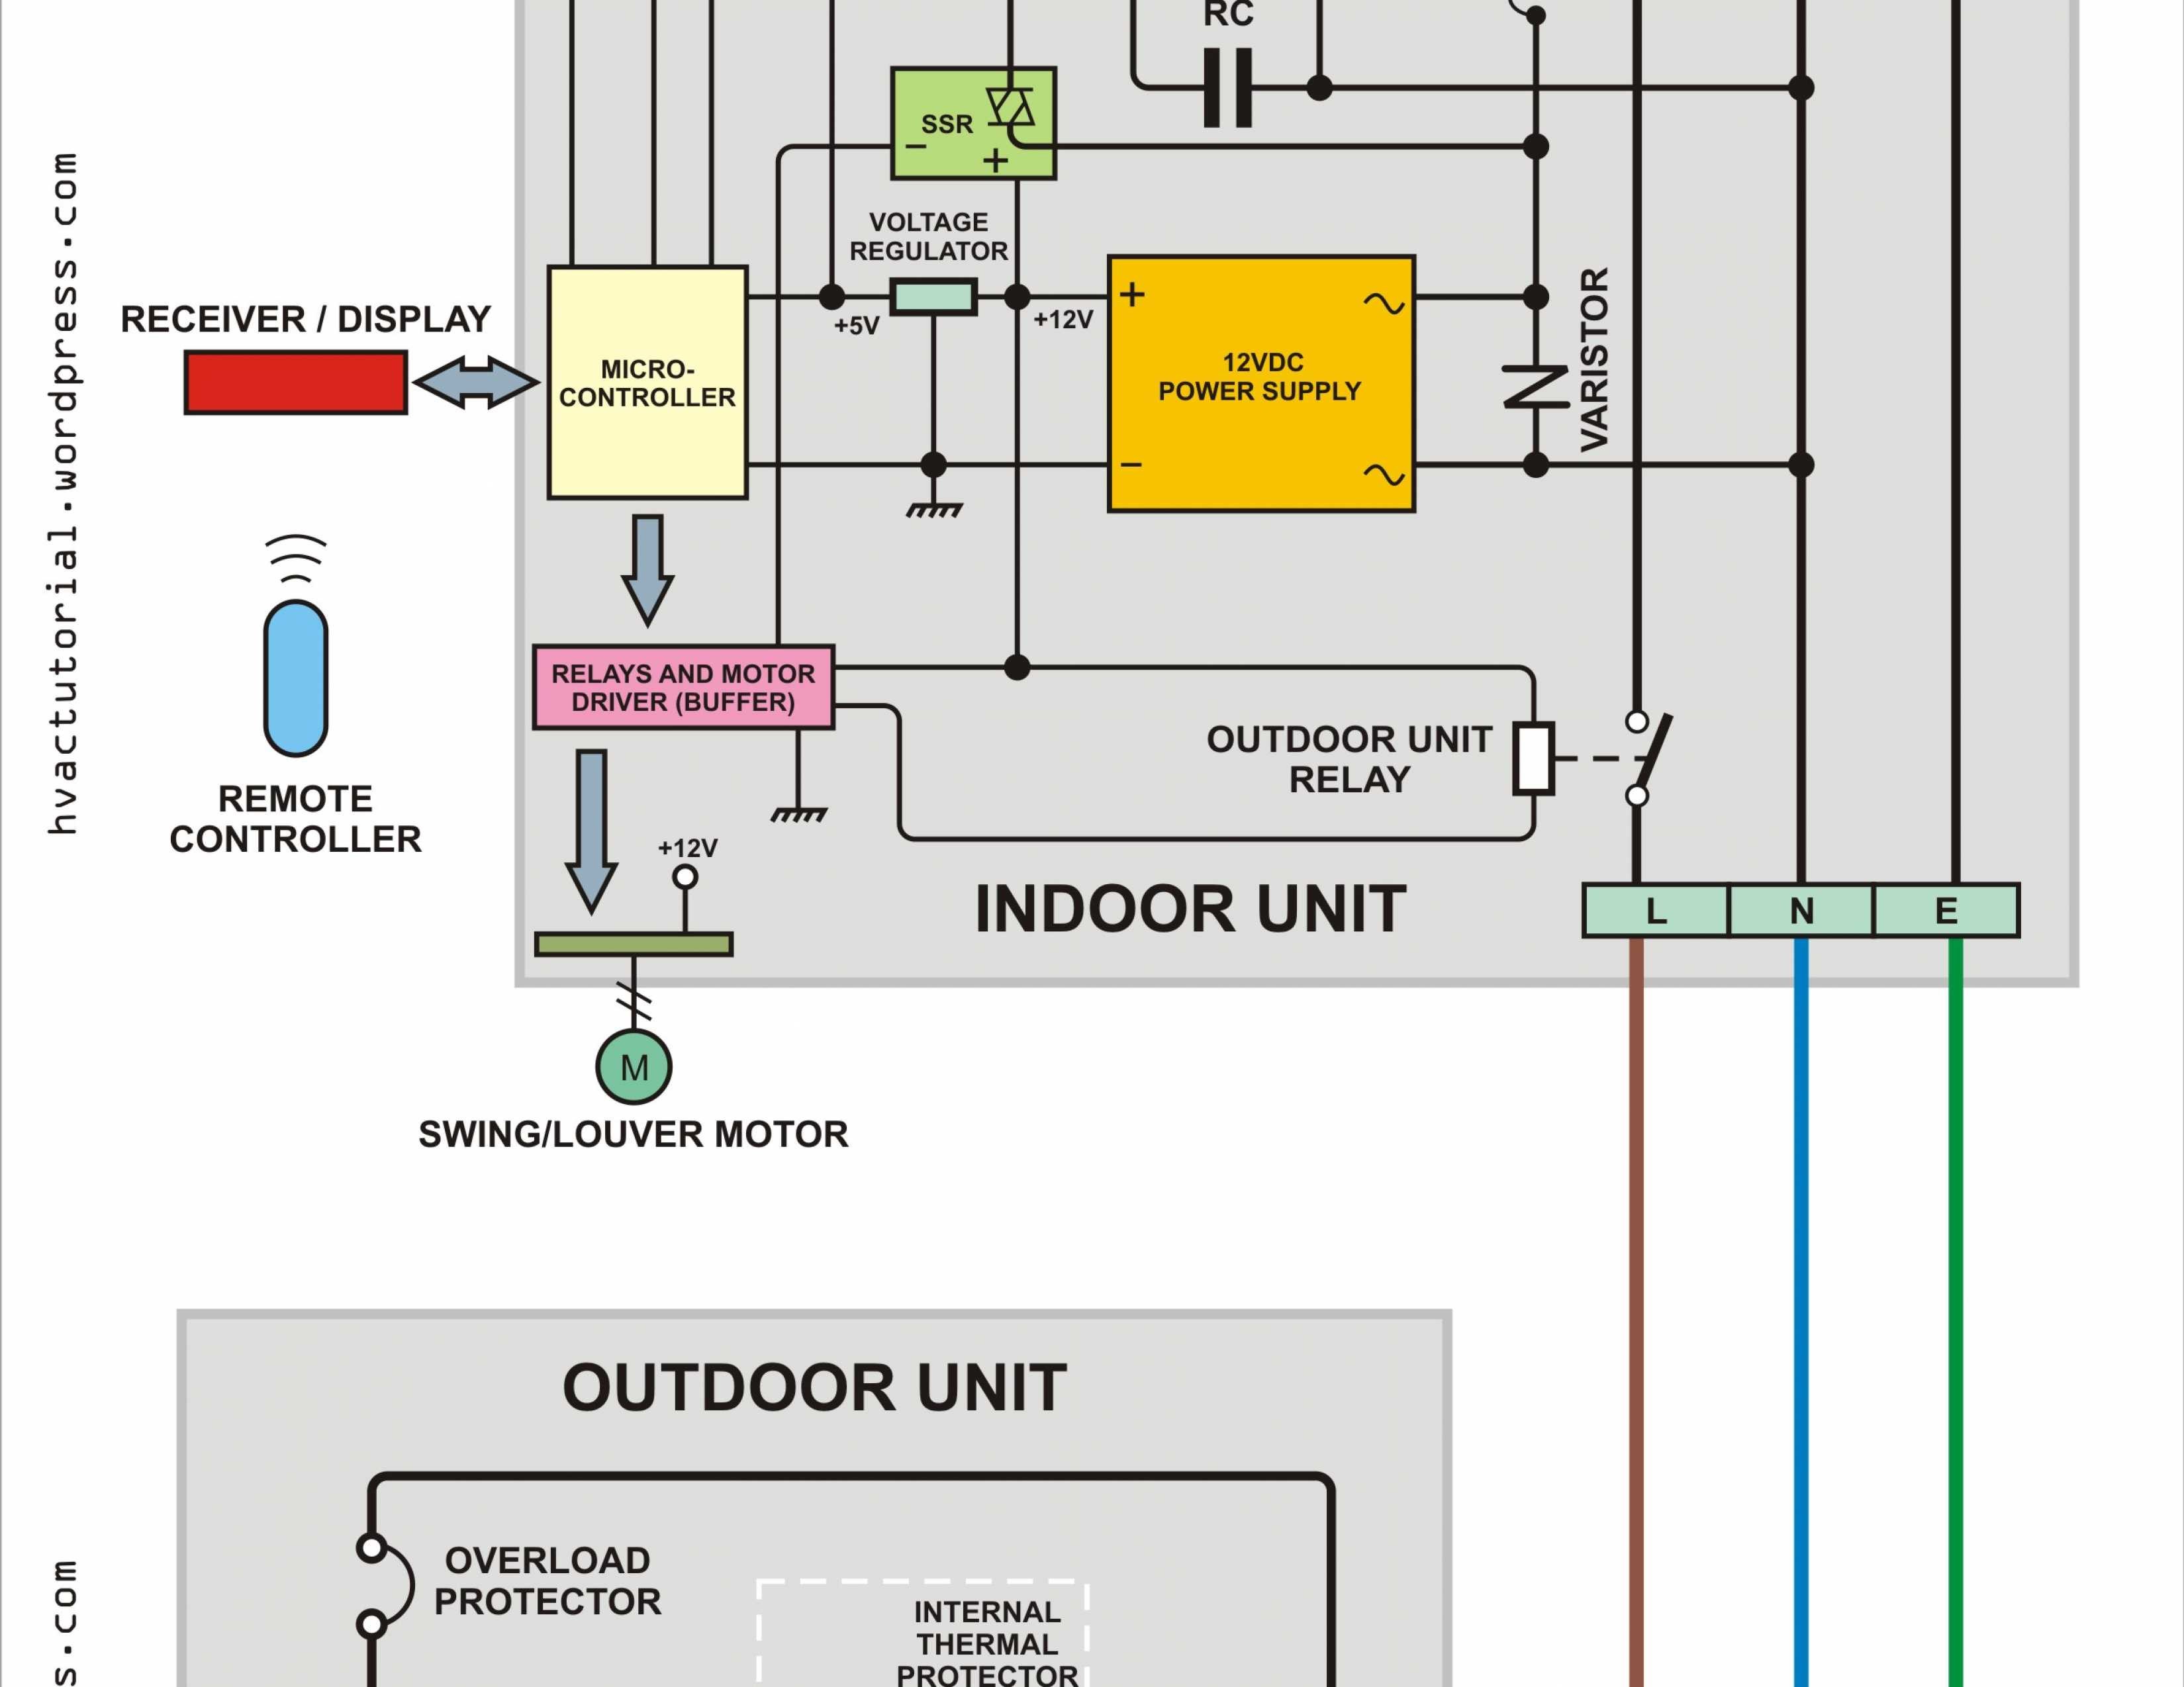 Wiring Diagram Split Type Air Conditioning Unique Air Conditioner Wiring Diagram